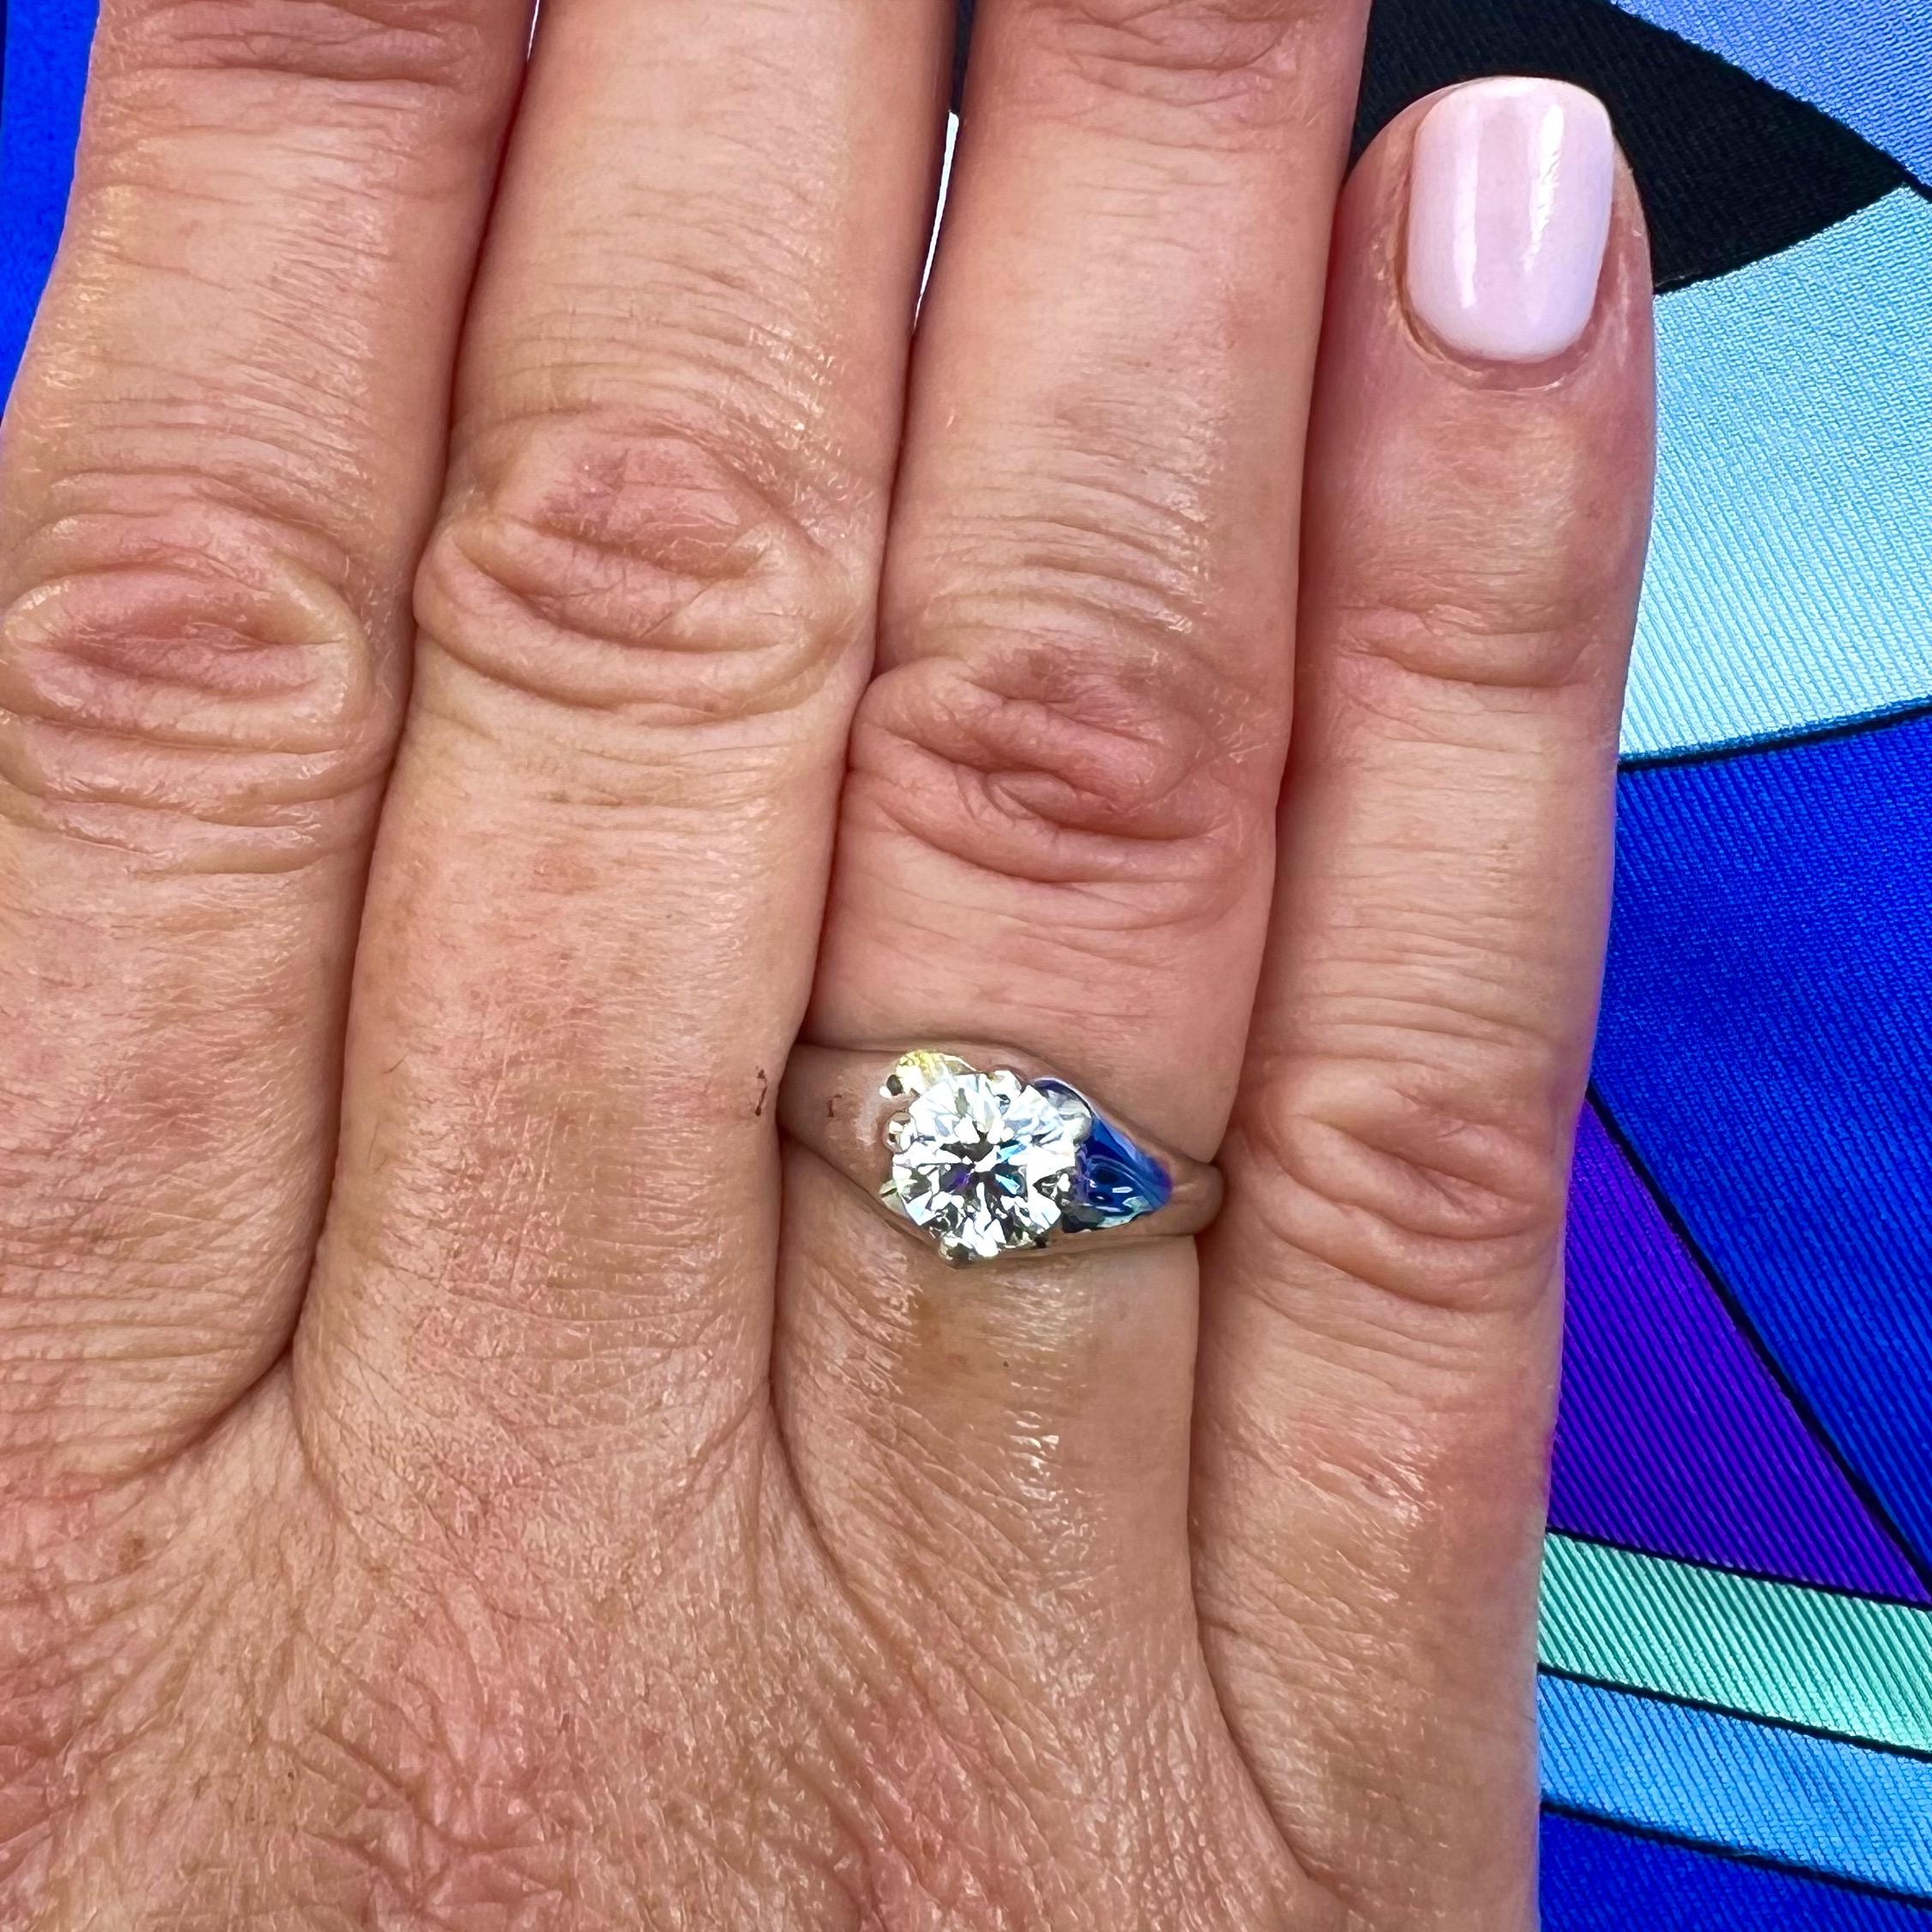 The finest quality diamond ring by top Italian jewelry house Bulgari. The platinum 